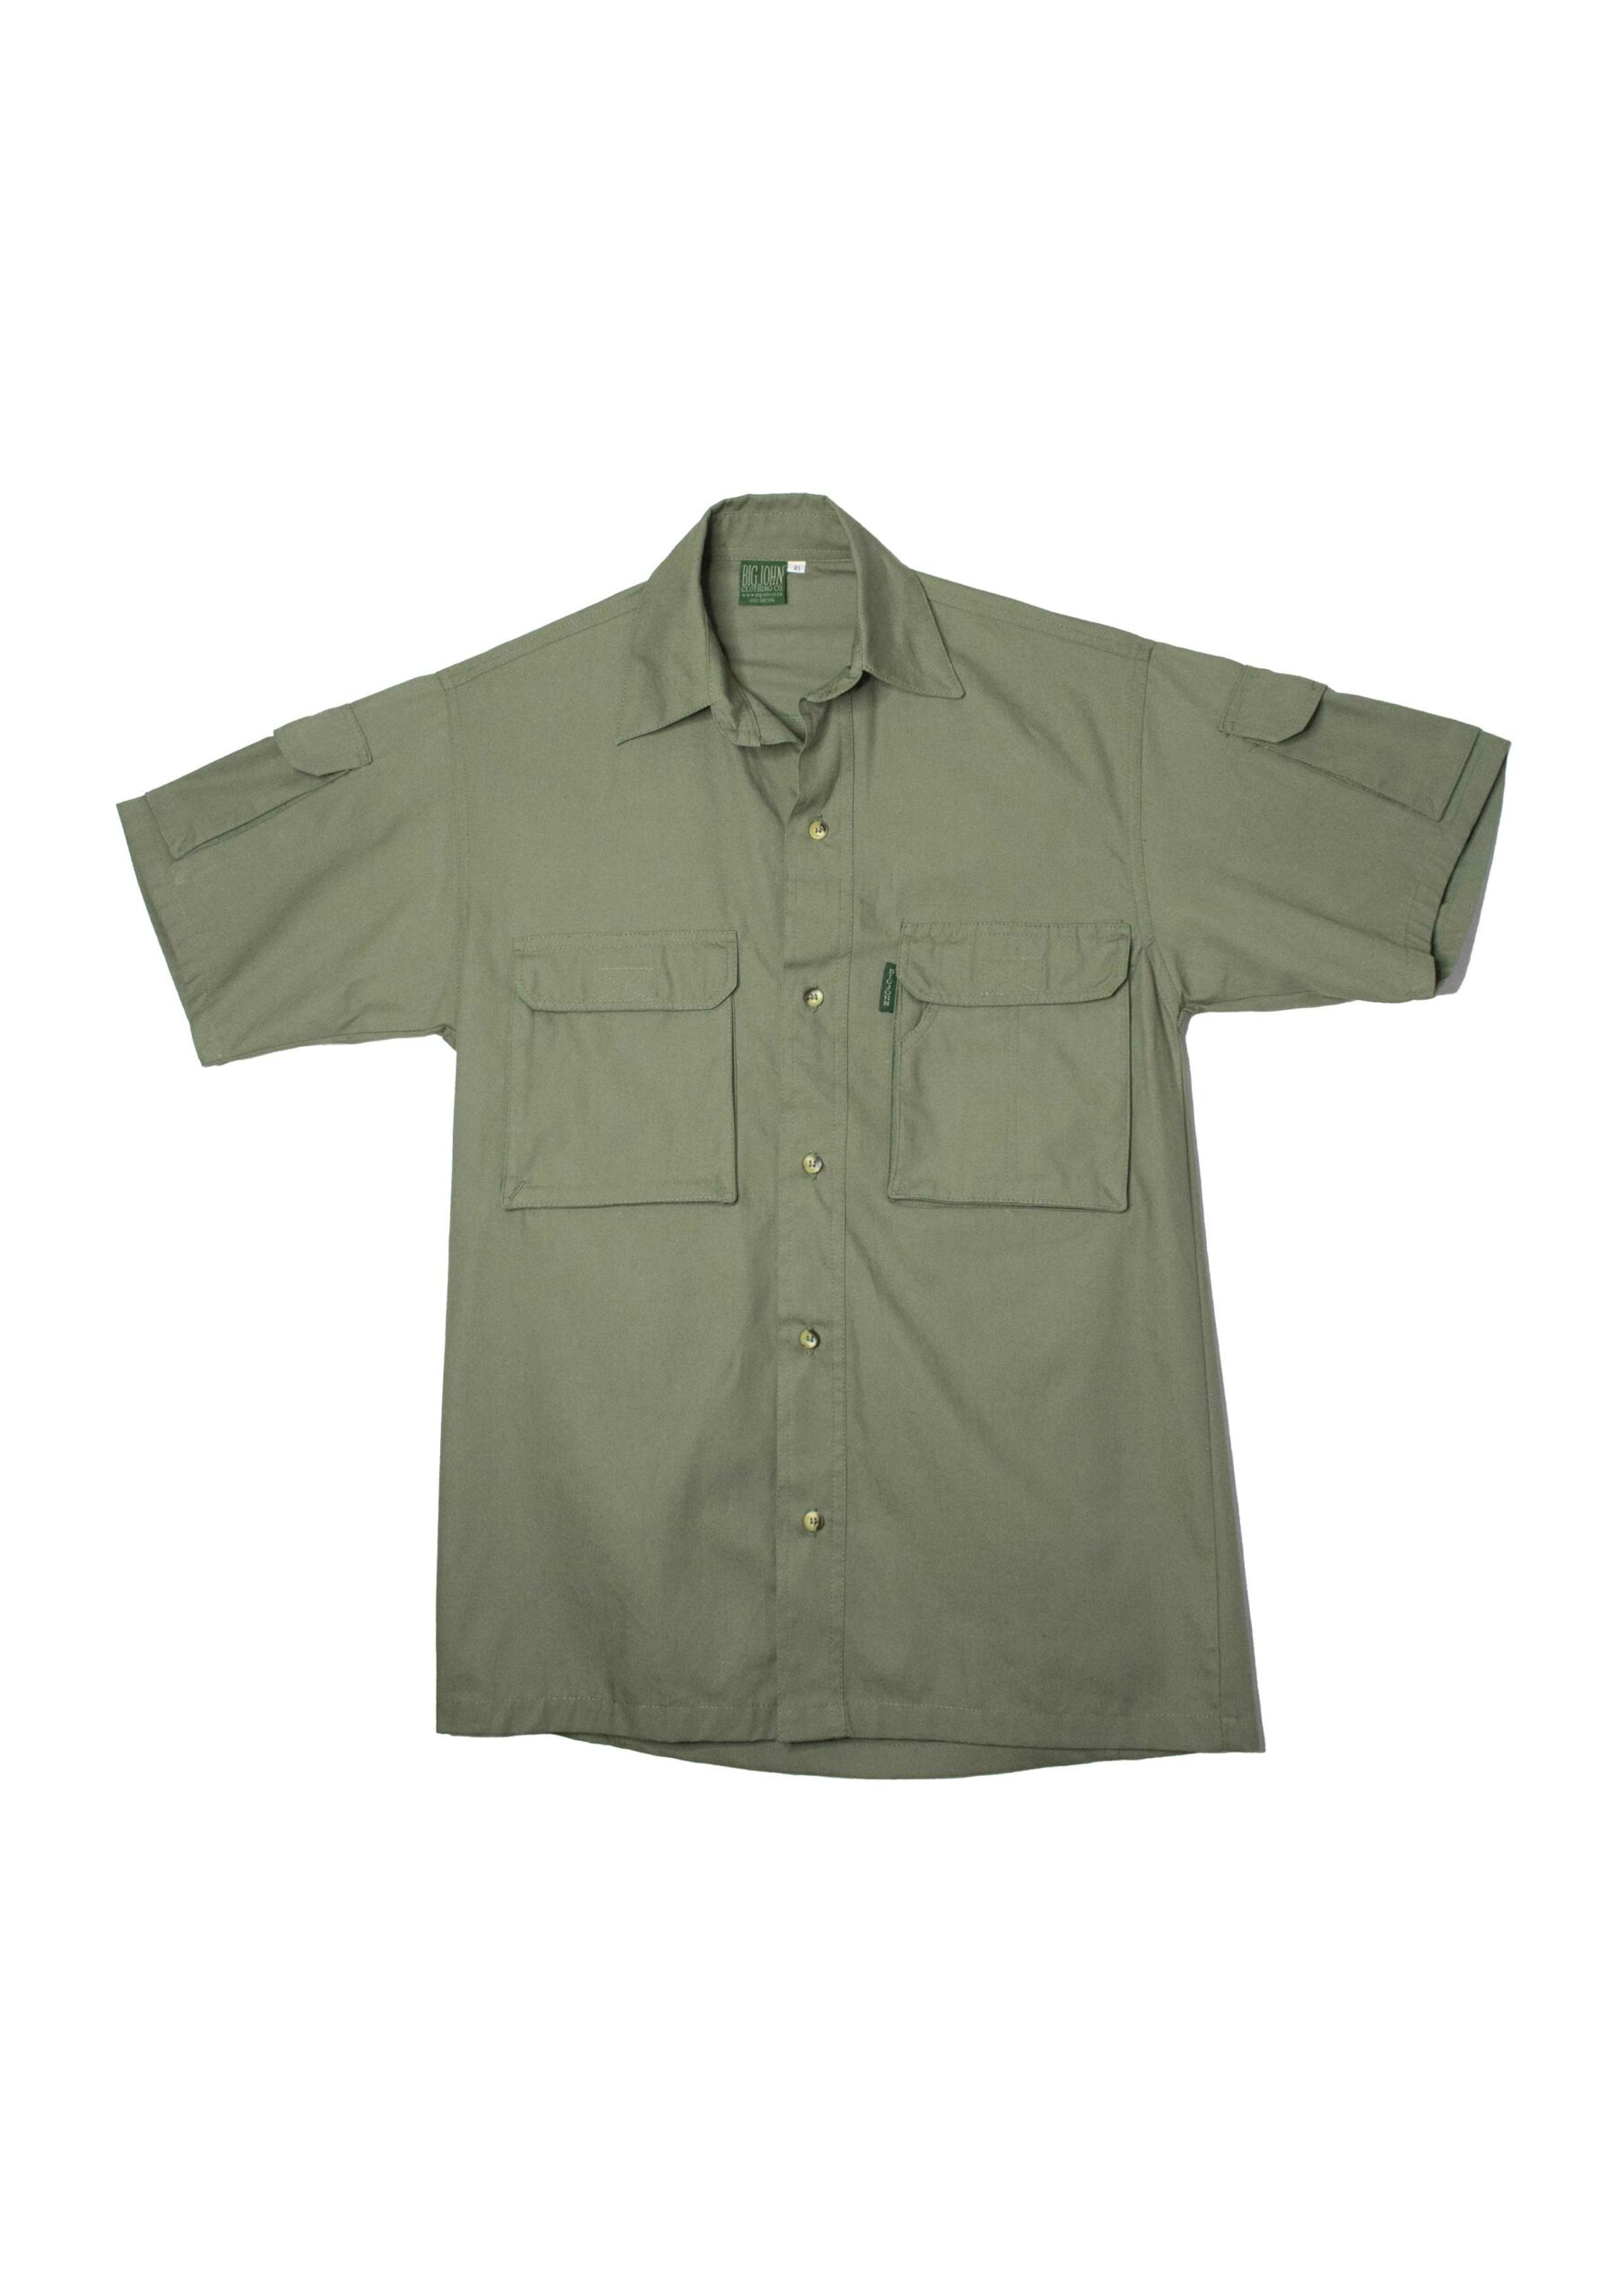 Zambezi Adventure Shirt-Short Sleeve (Cotton) - Big John Online ...